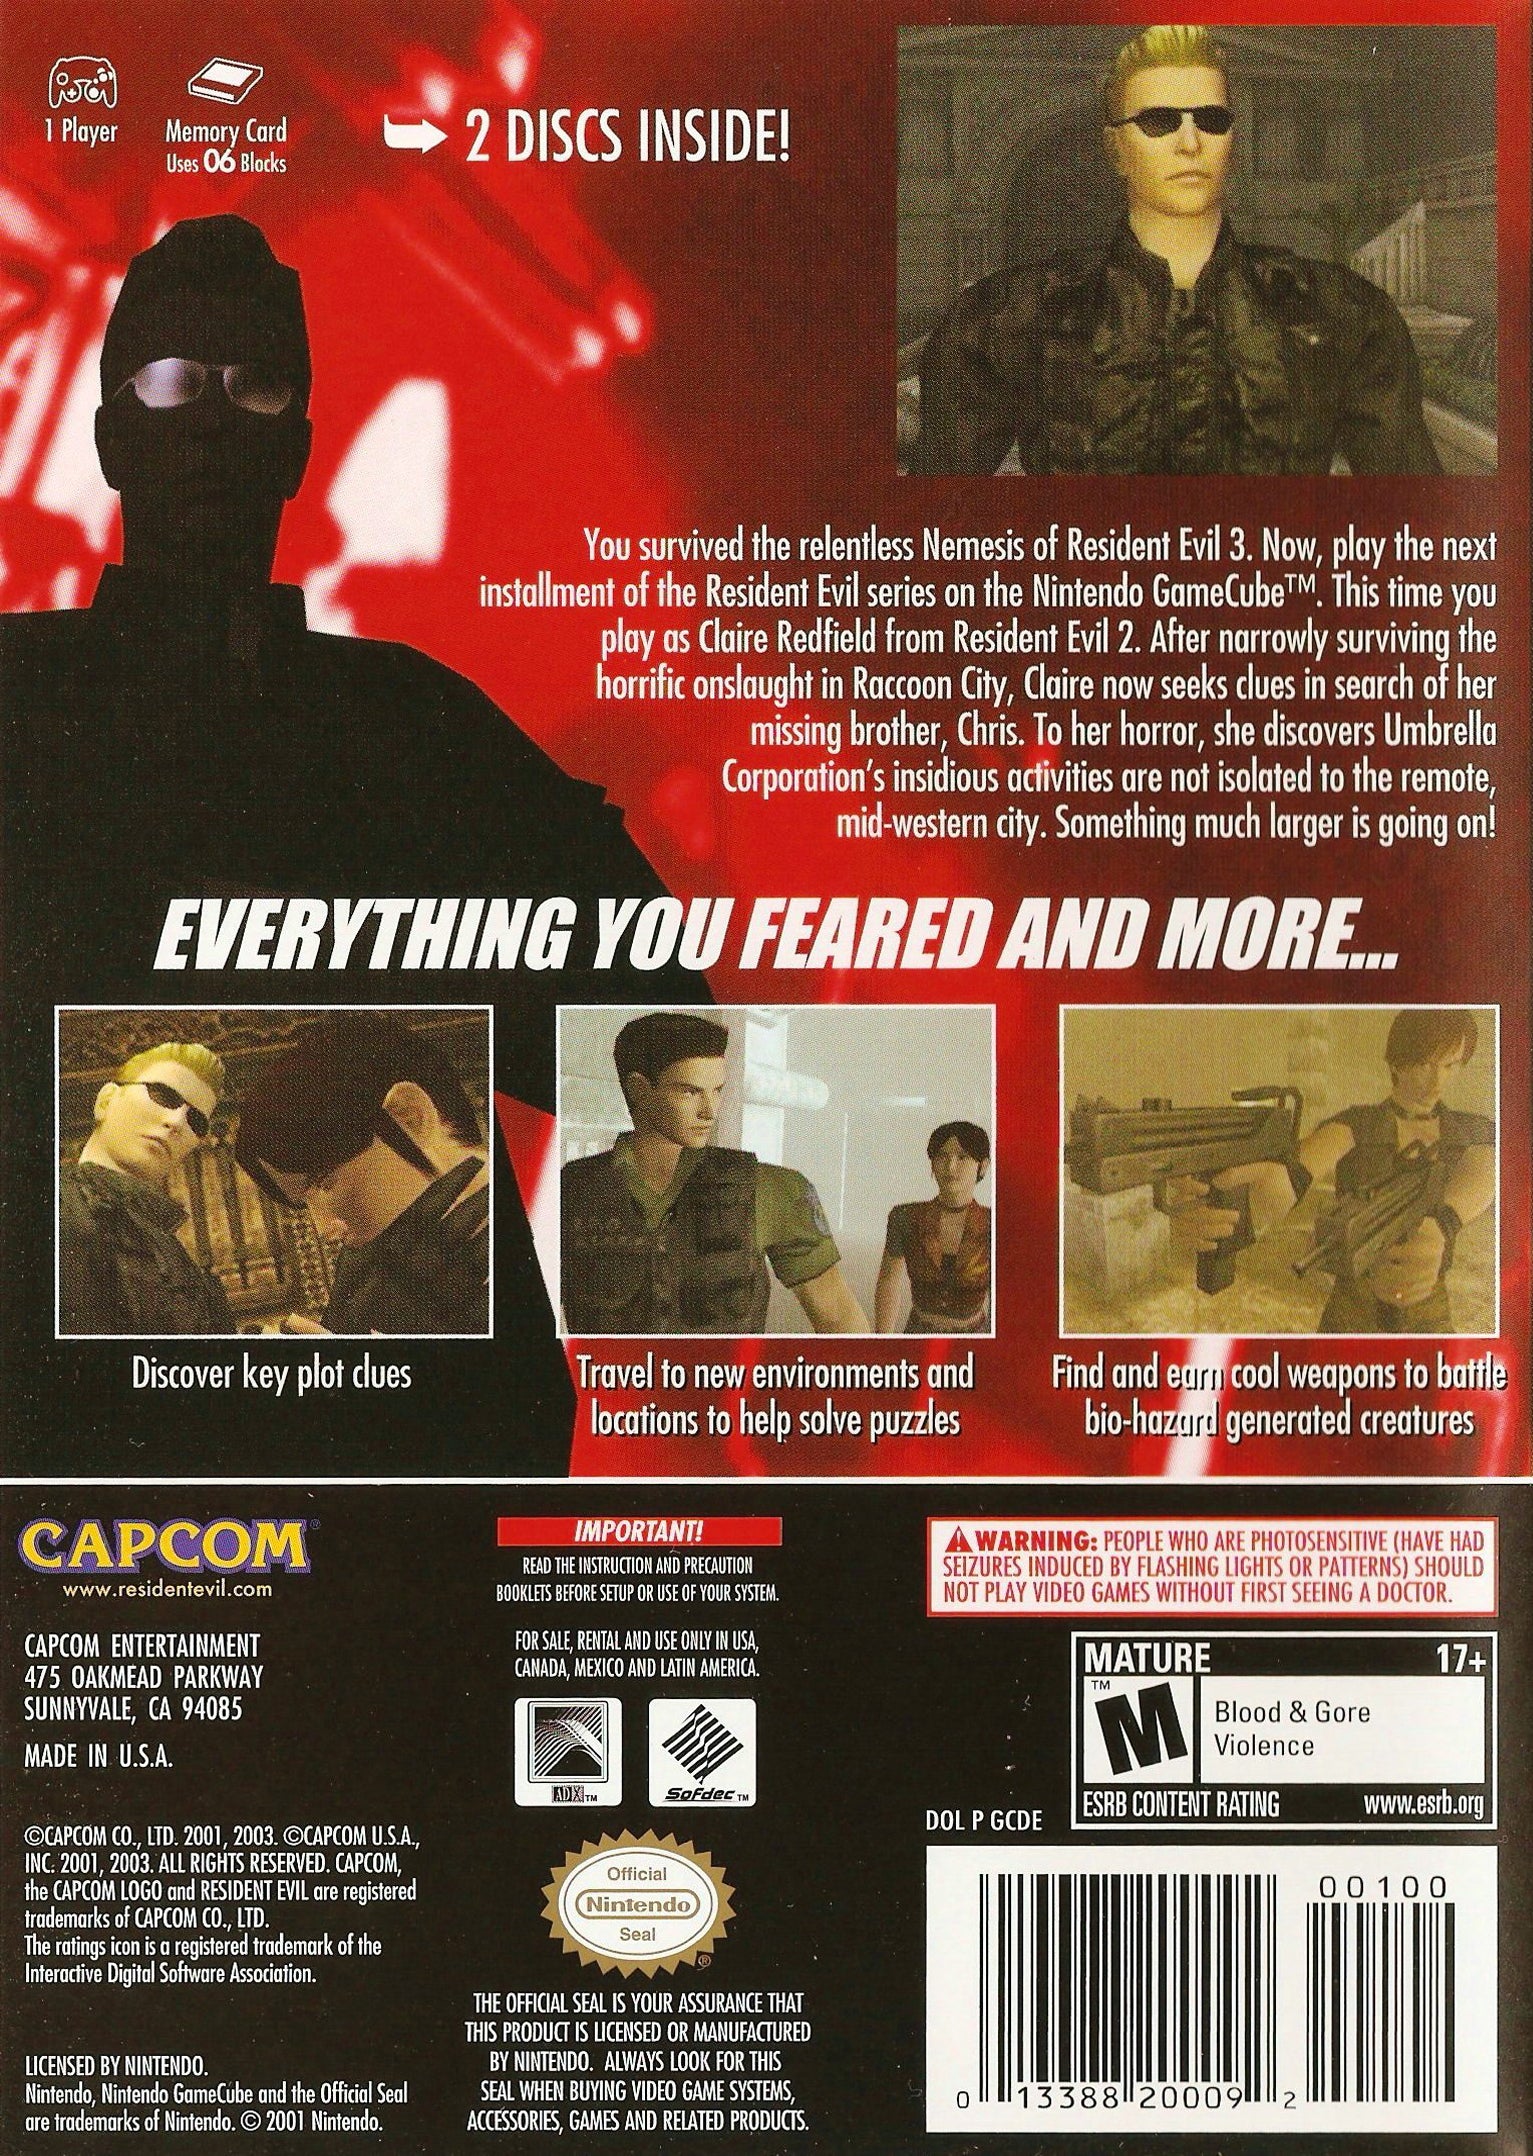 Resident Evil Code: Veronica X - (GC) GameCube [Pre-Owned] Video Games Capcom   